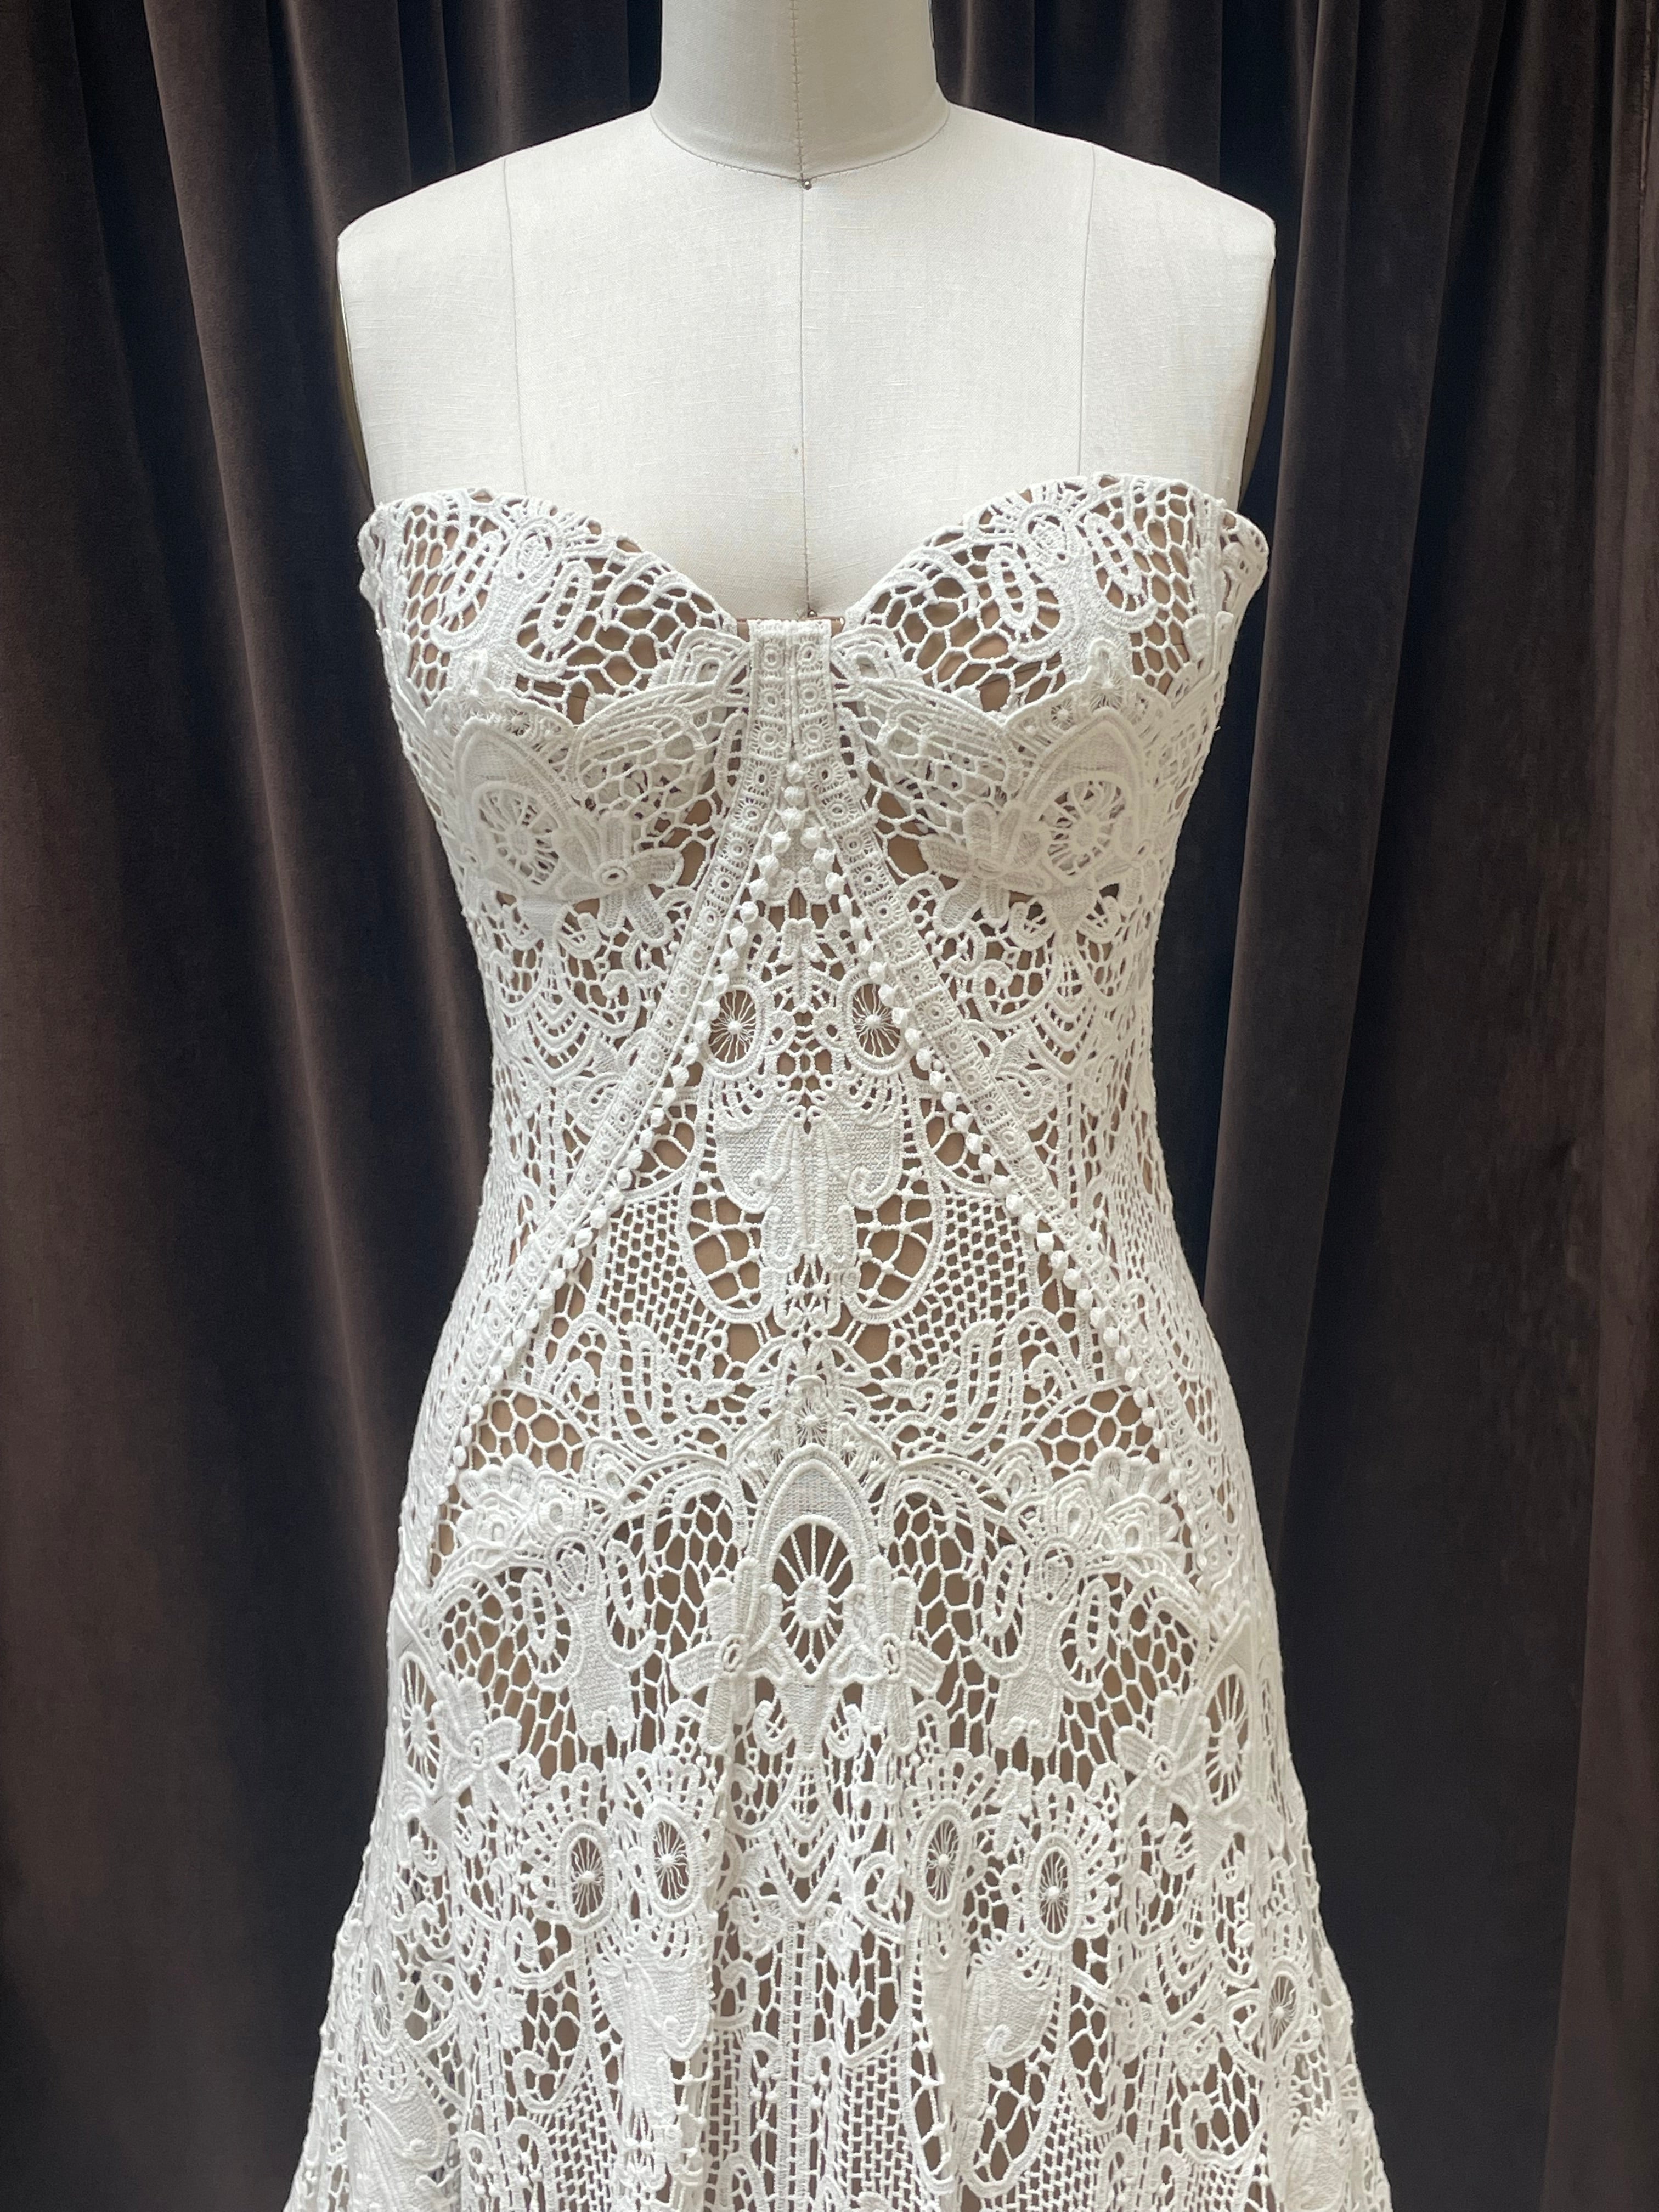 GC#35846 - Rue de Seine Beau Wedding Dress in Size 12